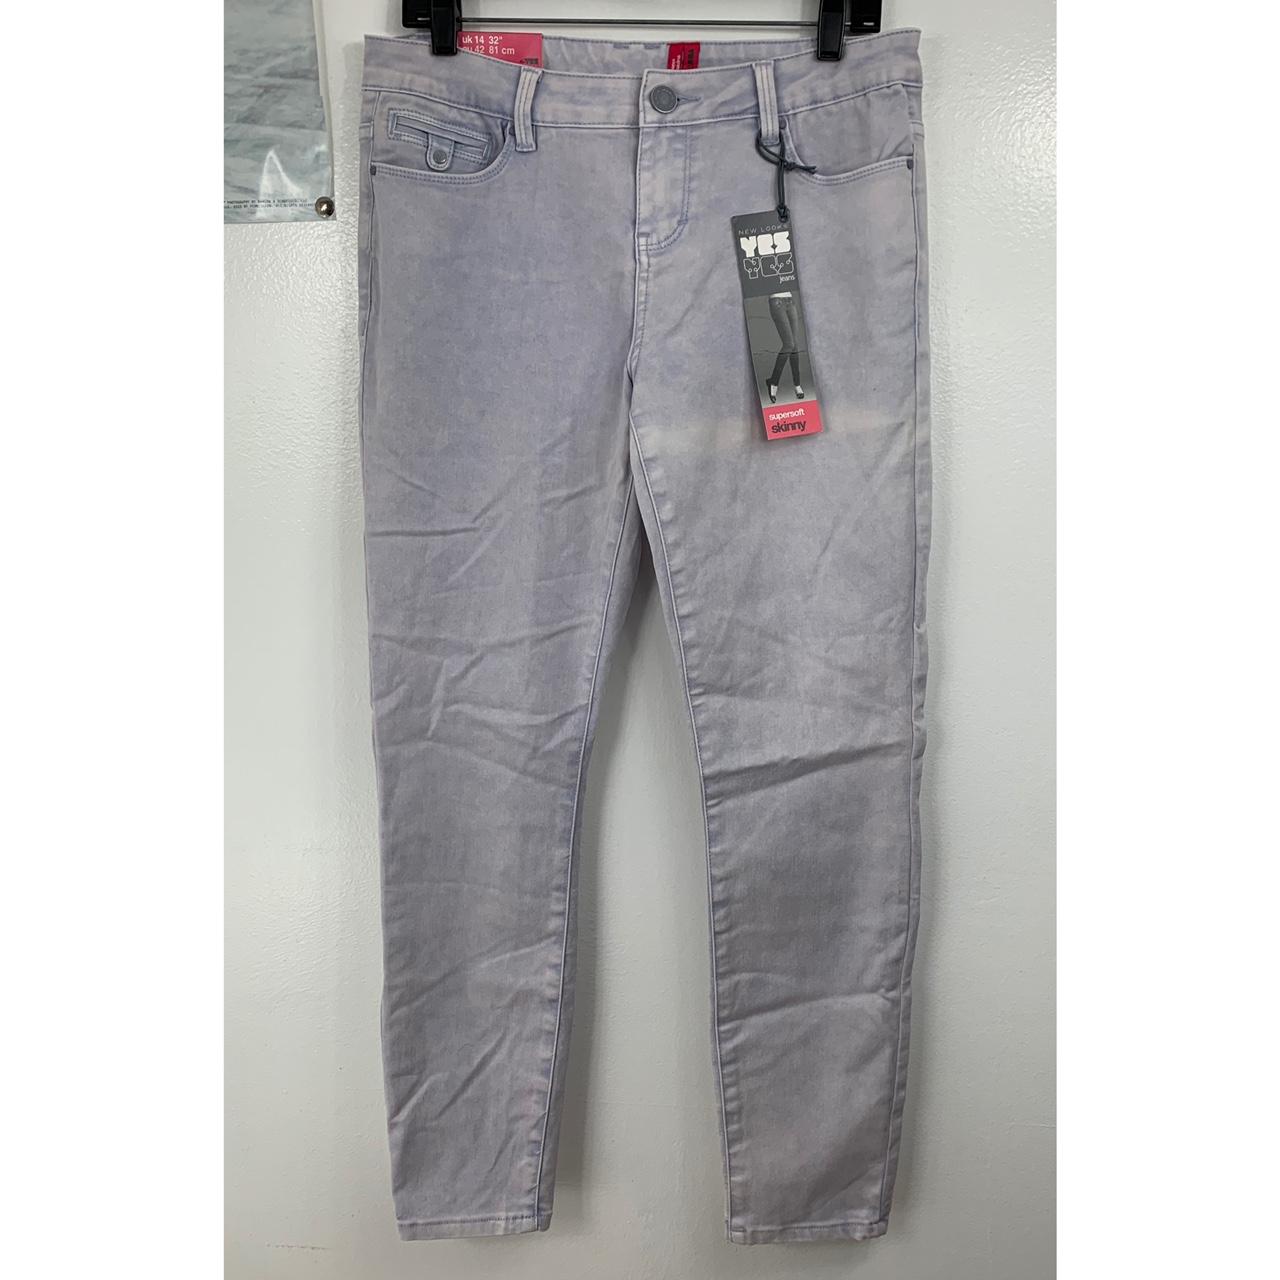 Product Image 1 - Light purple skinny pants. New